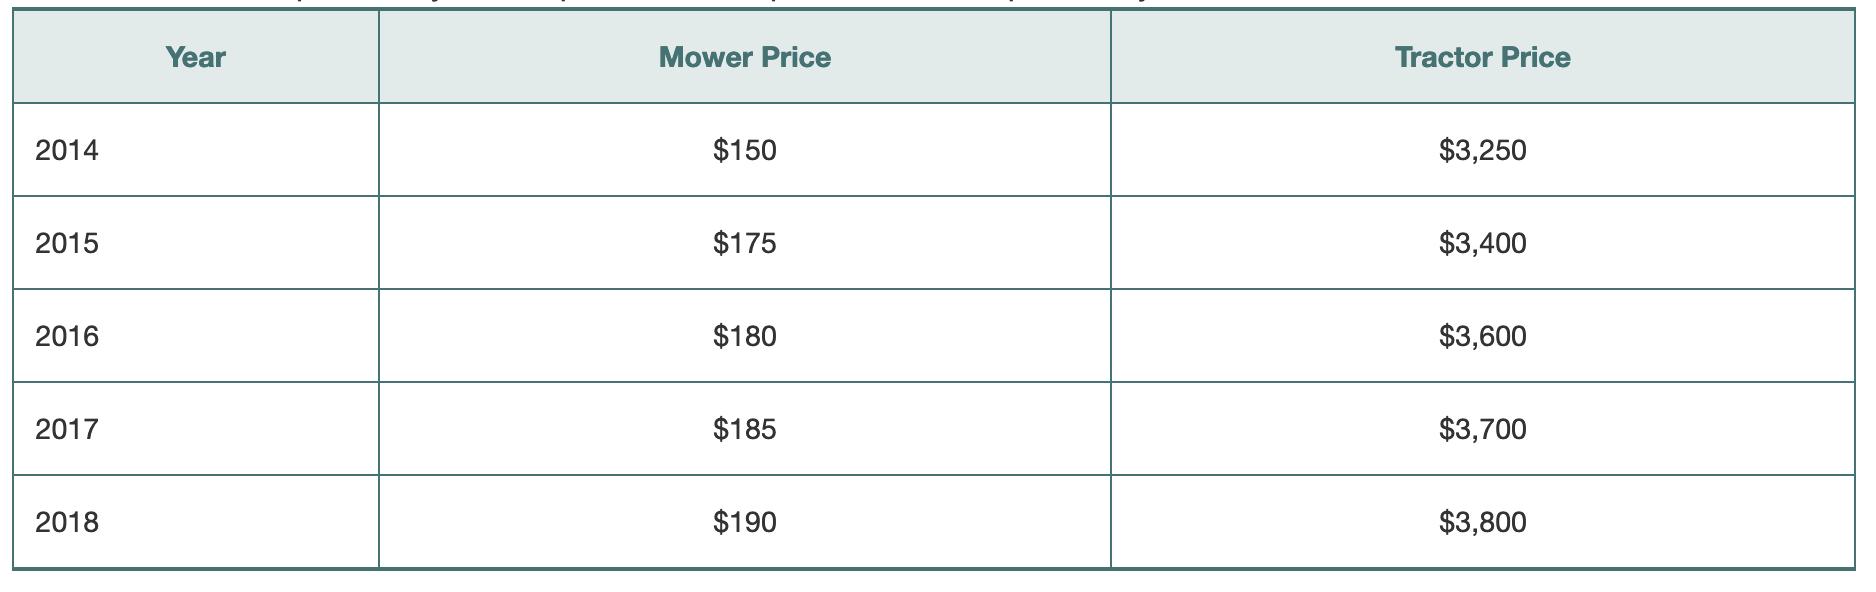 Year Mower Price Tractor Price 2014 $150 $3,250 2015 $175 $3,400 2016 $180 $3,600 2017 $185 $3,700 2018 $190 $3,800